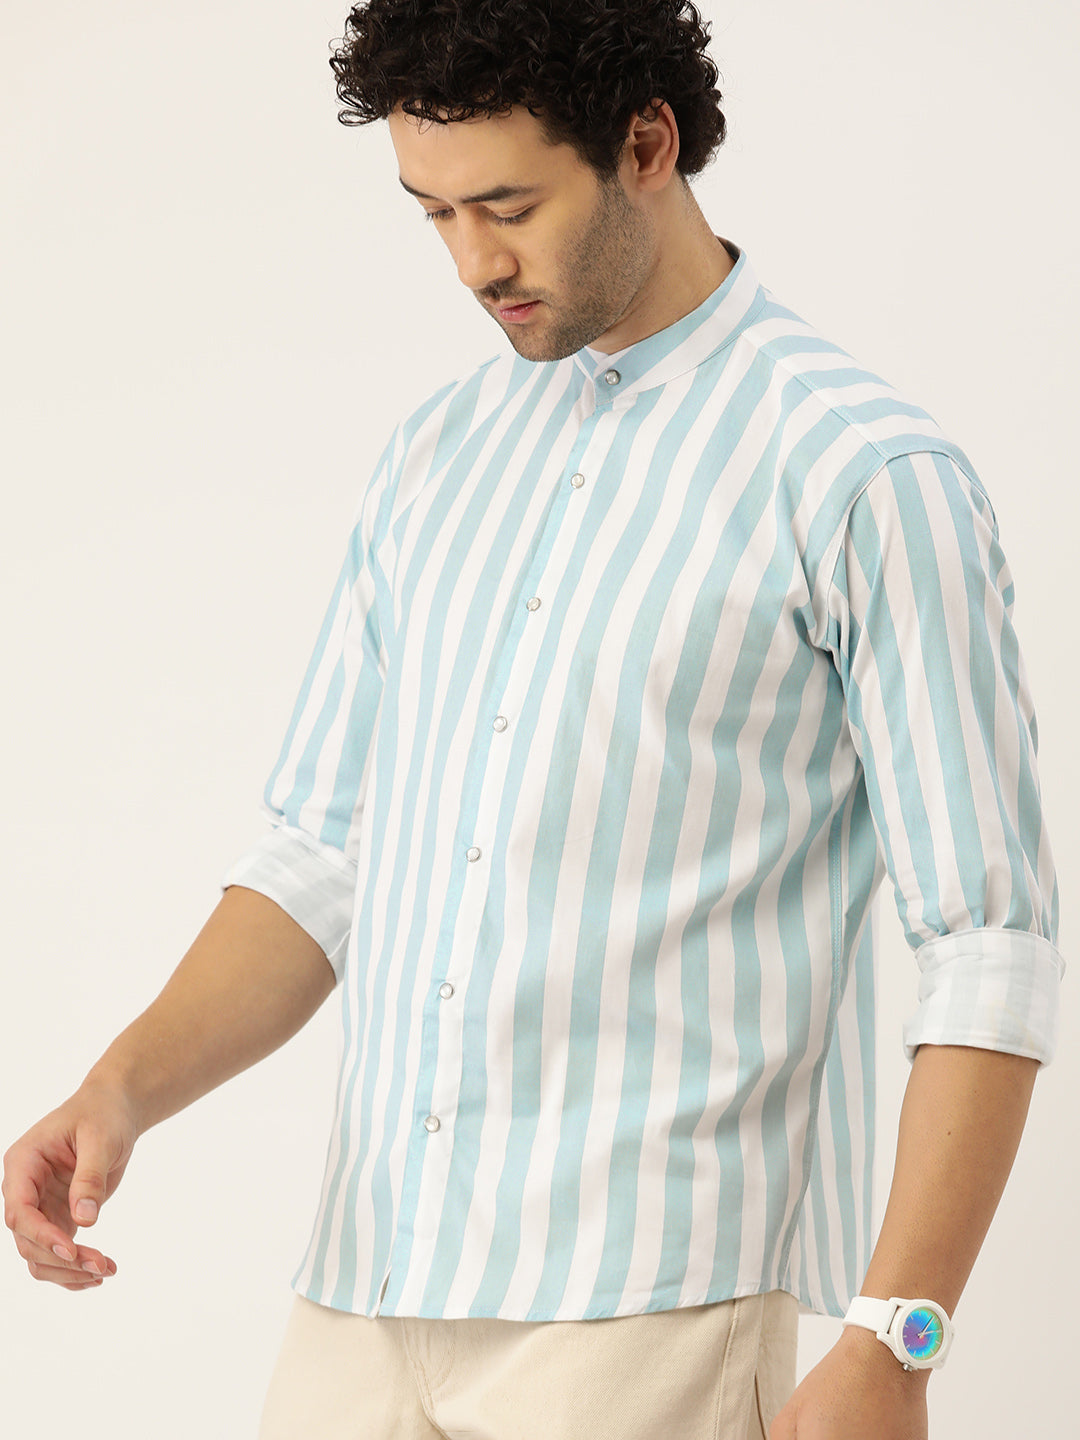 Luxrio Men's Stripped Mandarin Collared Full Sleeves Casual Shirt Blue